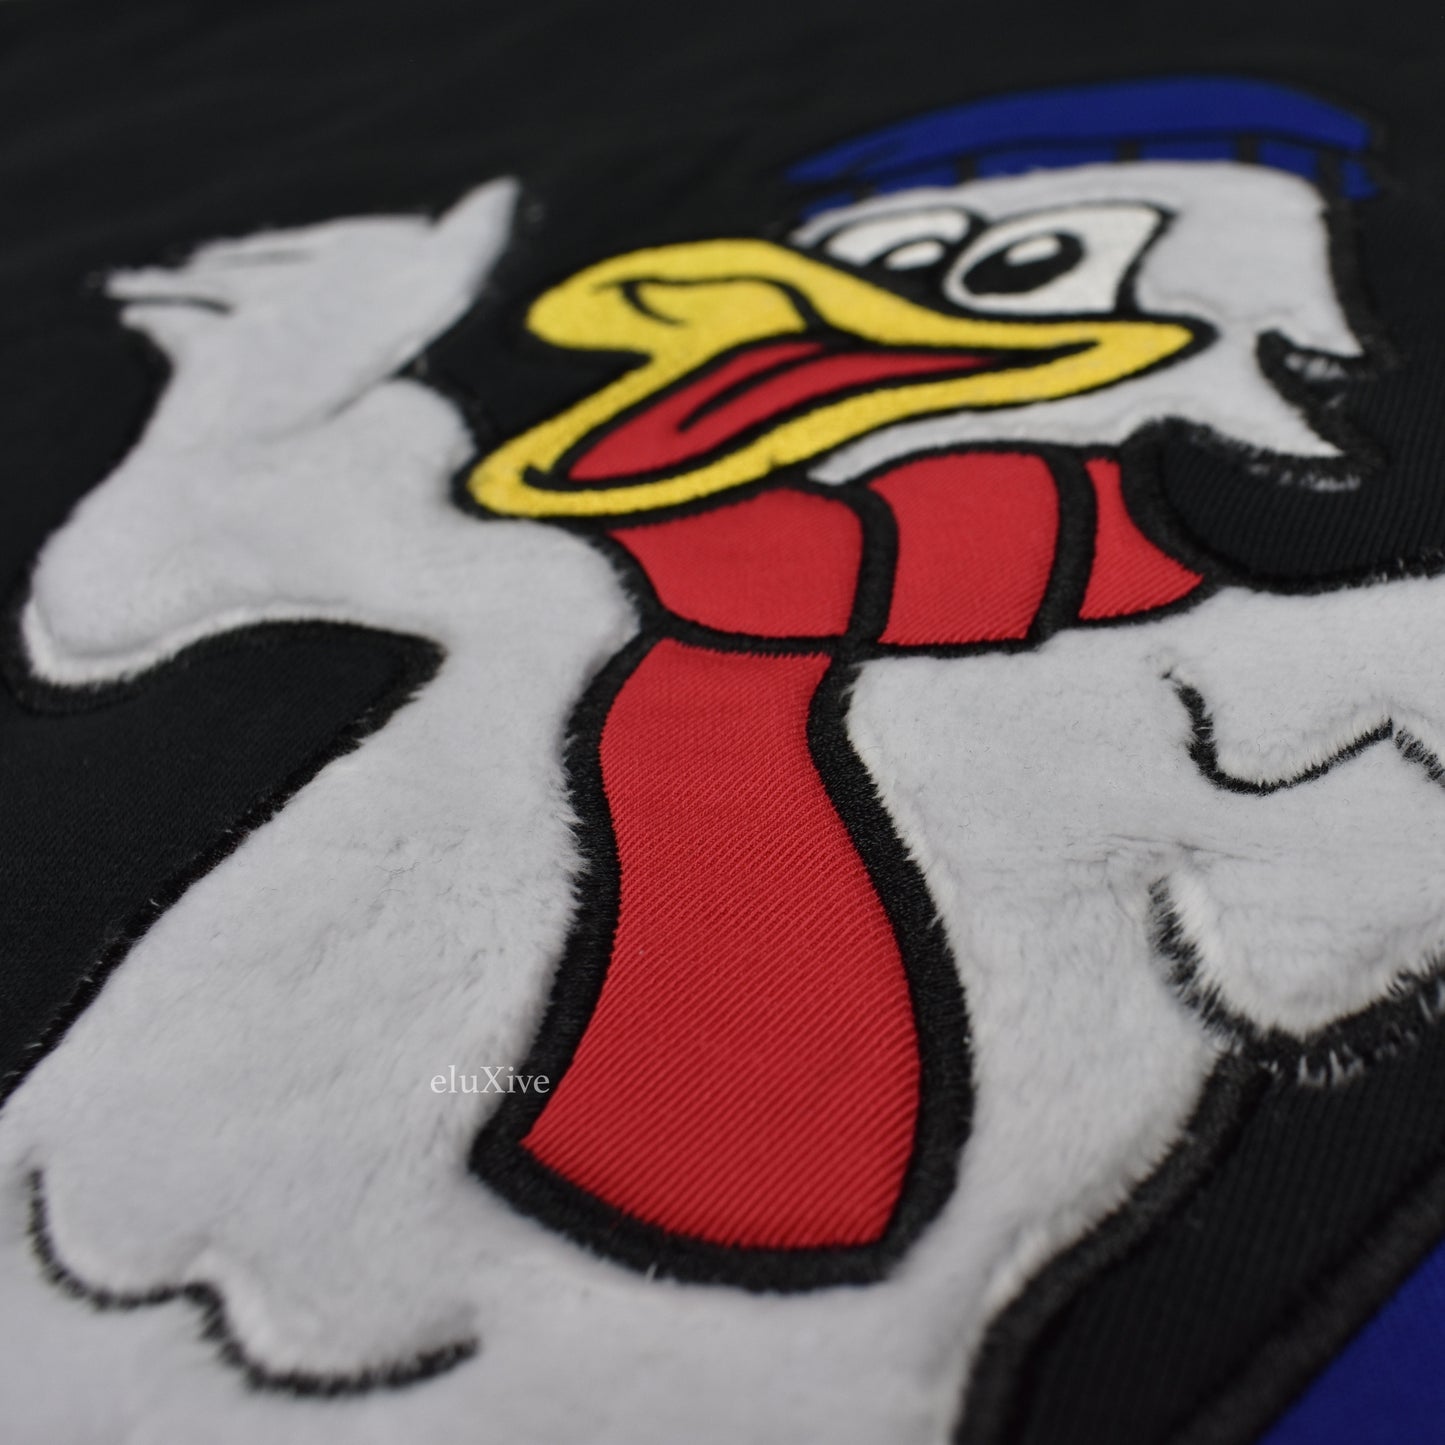 Palace - Chilly Duck P-Logo Crewneck Sweatshirt (Black)